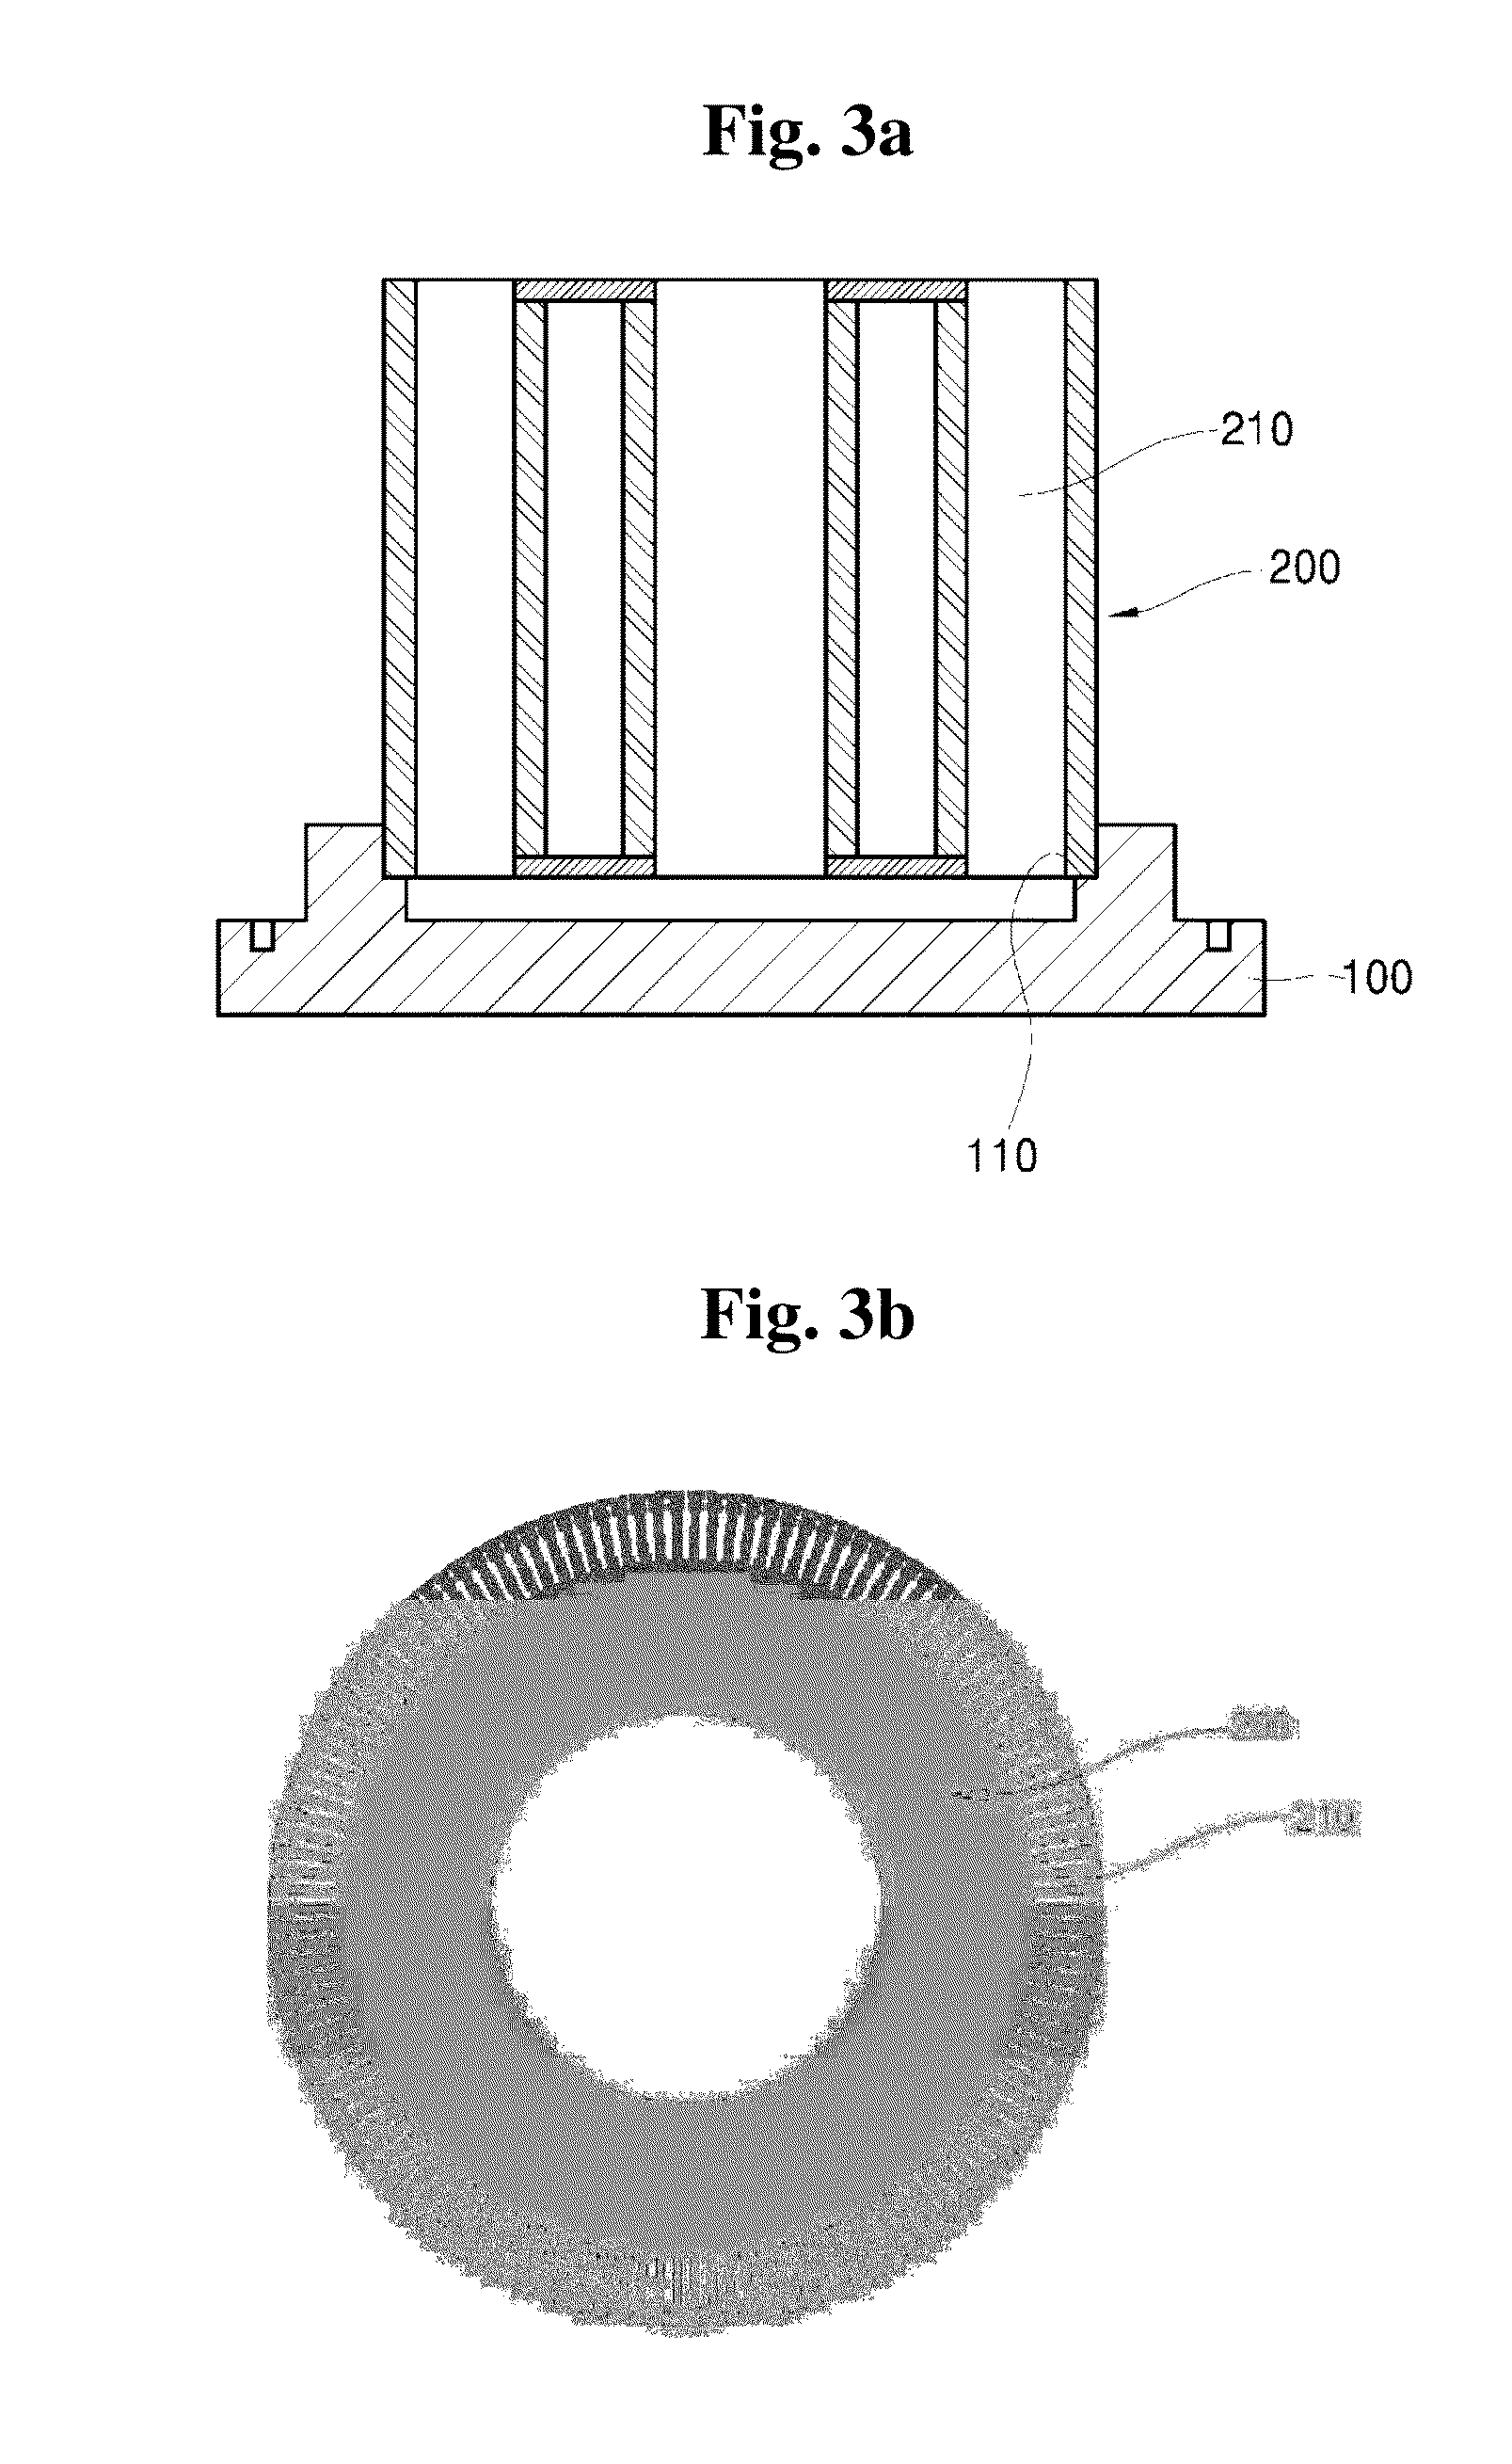 Method for centrifugal casting of motor rotor